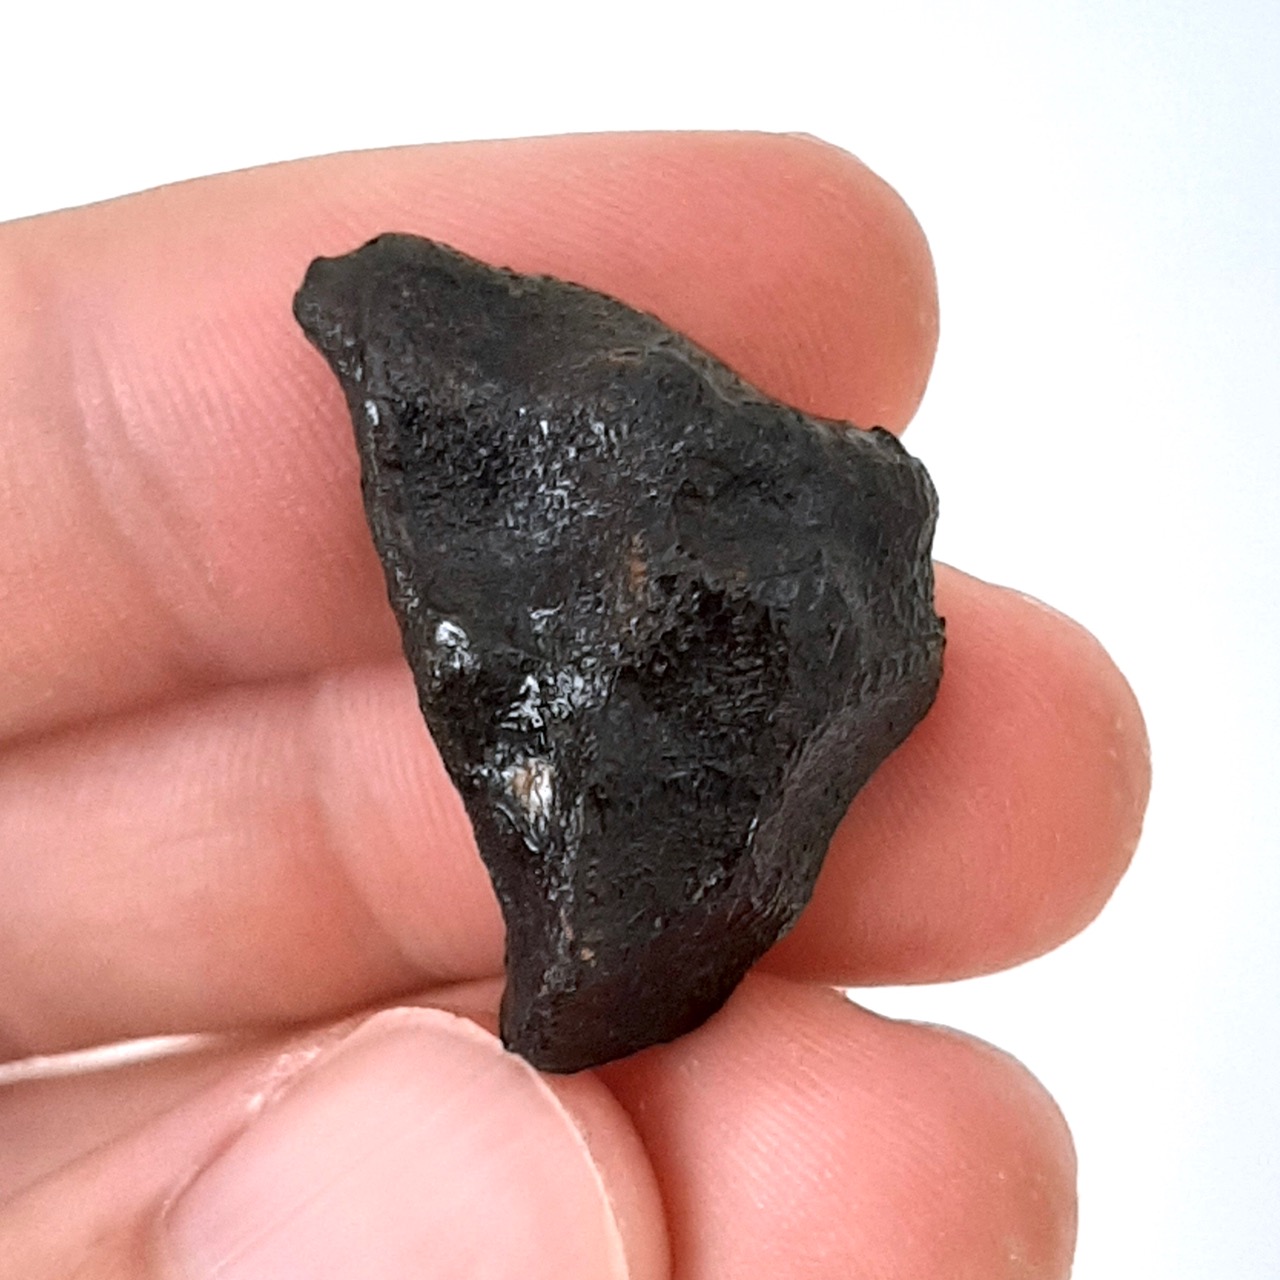 Camel Donga meteorite. 100% crusted eucrite.